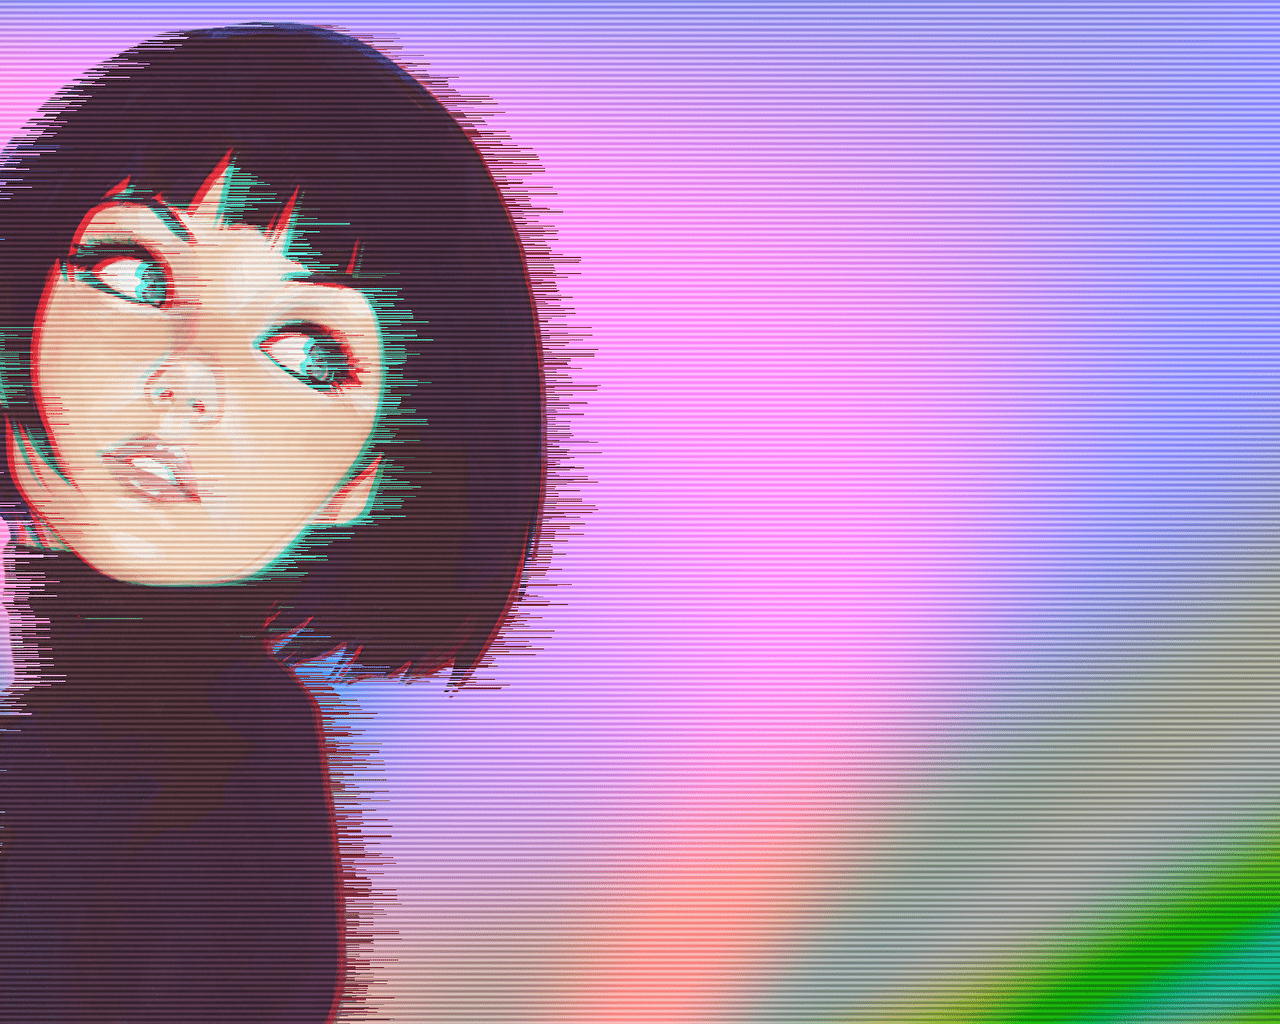 Glitch art of a woman with short black hair - Dark vaporwave